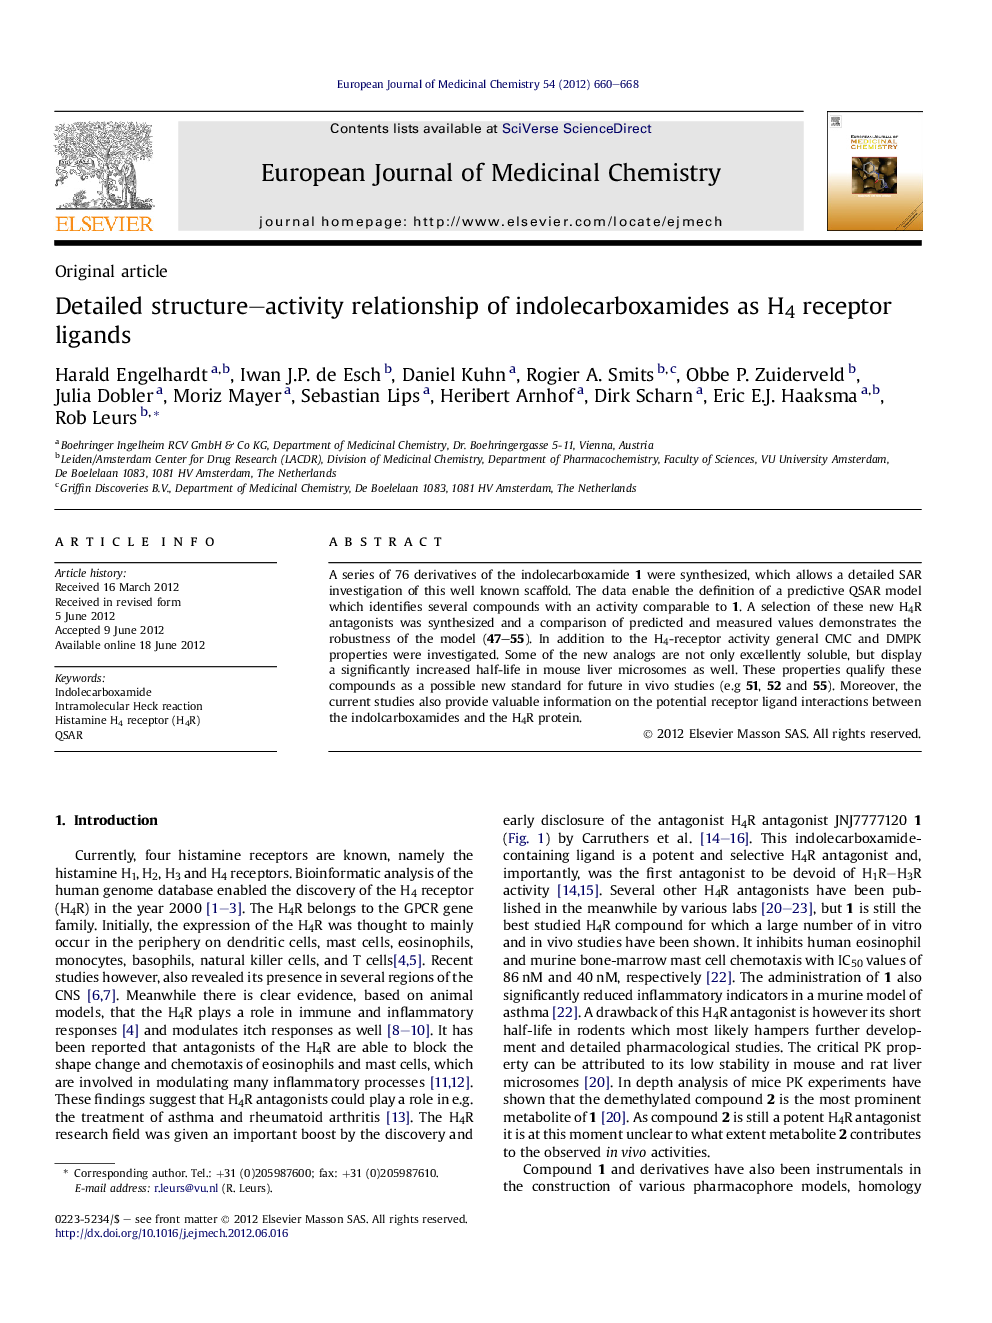 Detailed structure-activity relationship of indolecarboxamides as H4 receptor ligands